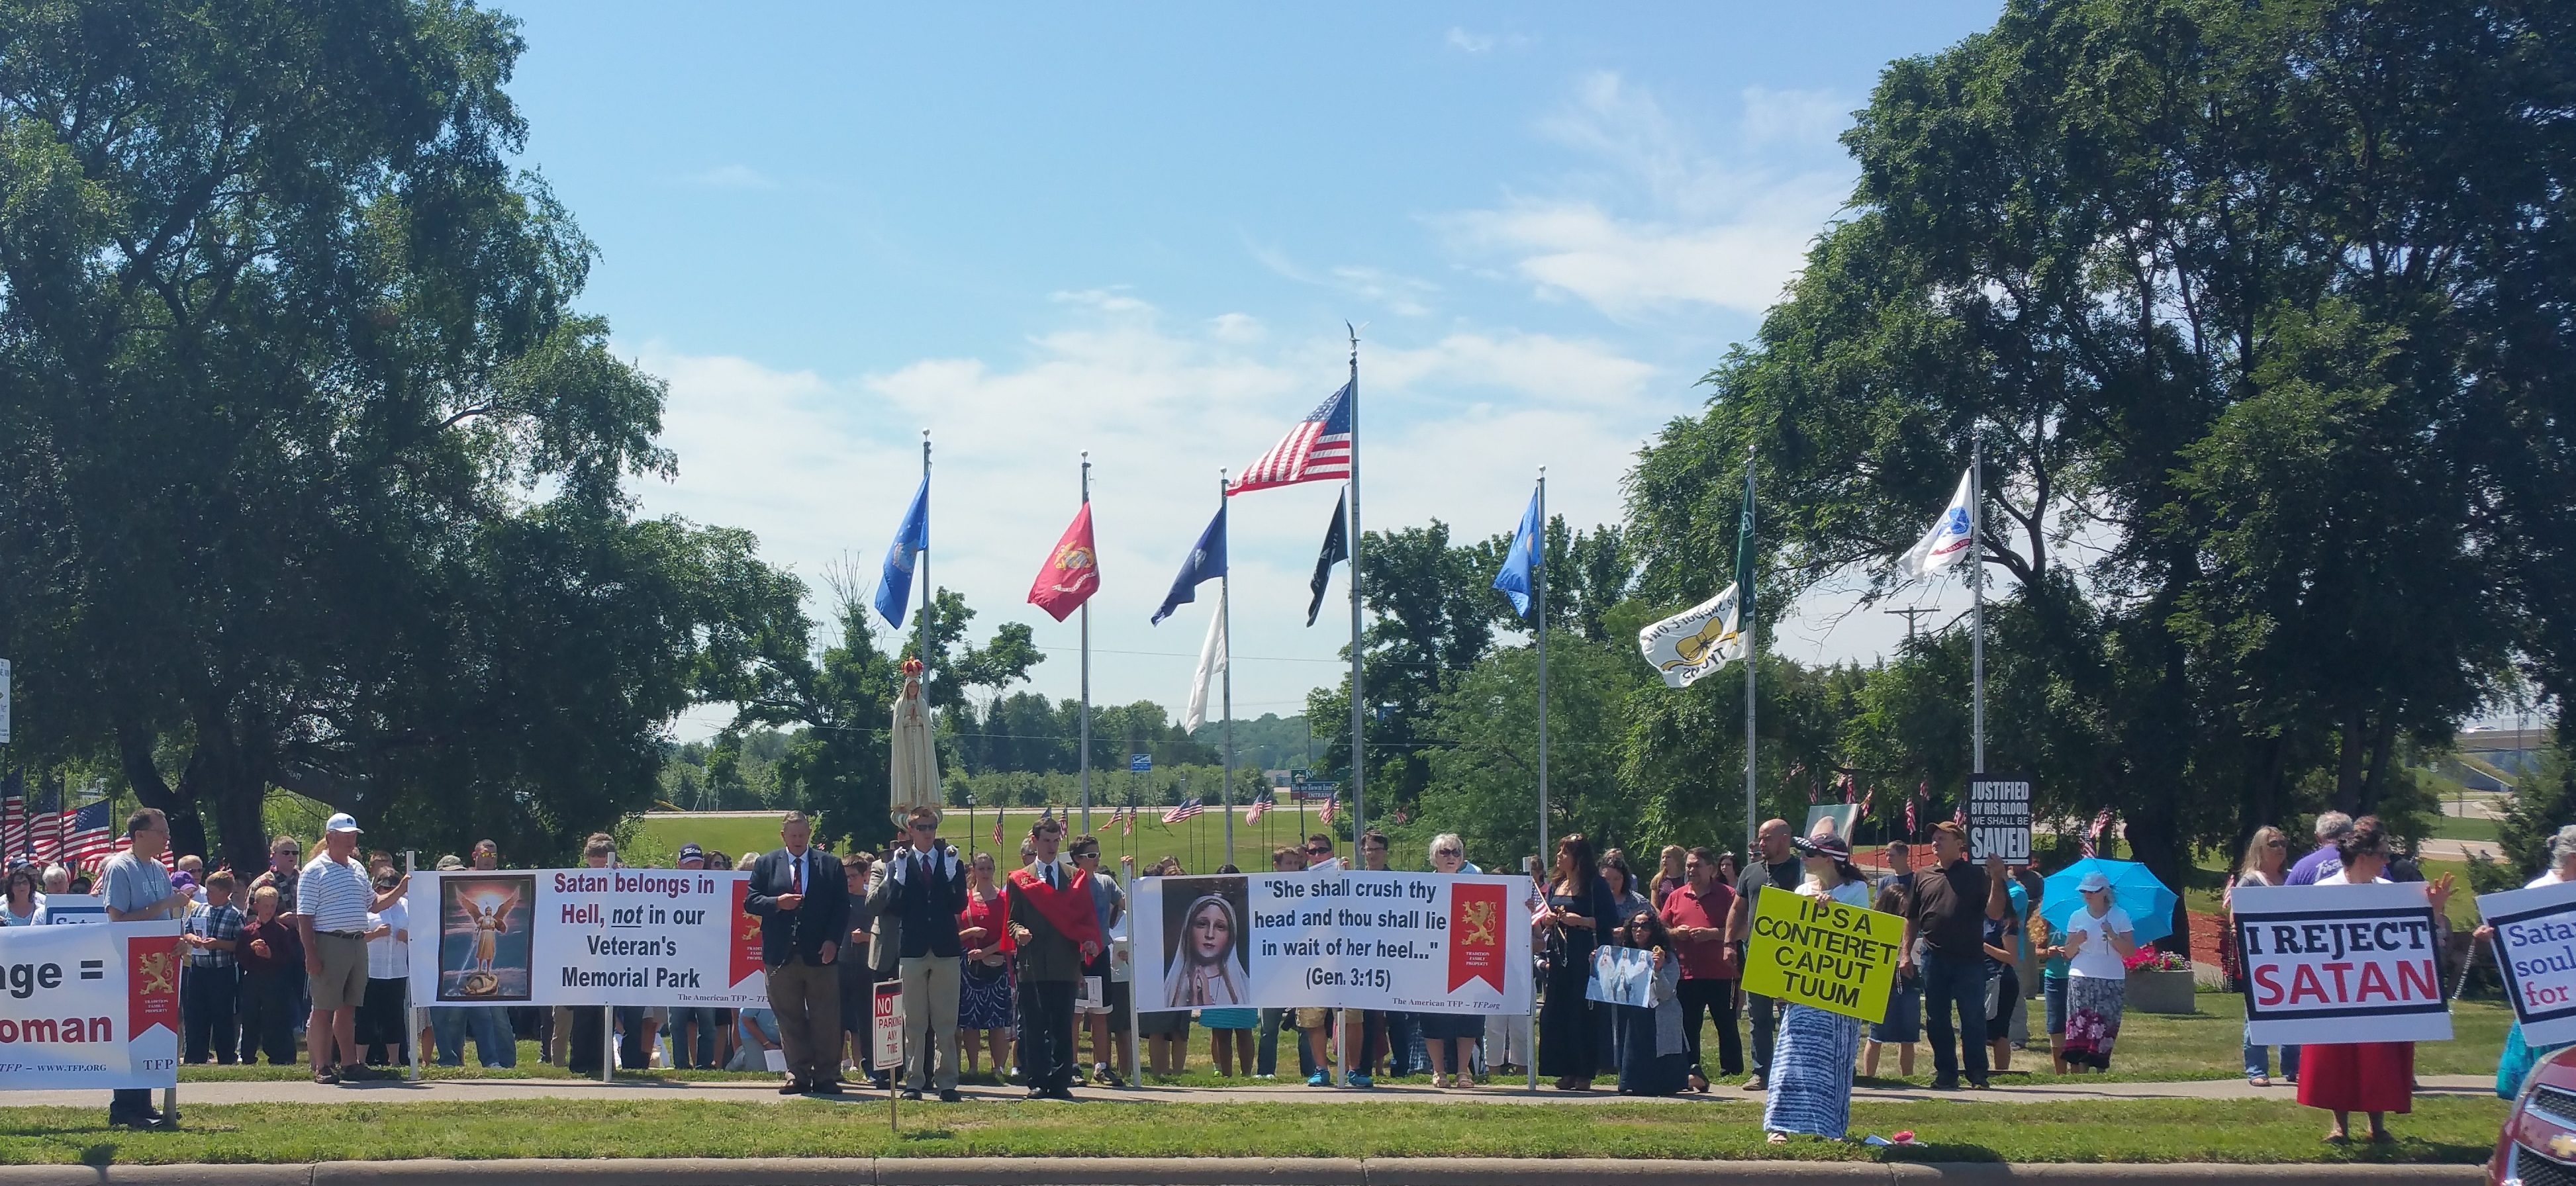 Return to Order Catholics Reject Satan Monument in Belle Plaine, Minnesota 7